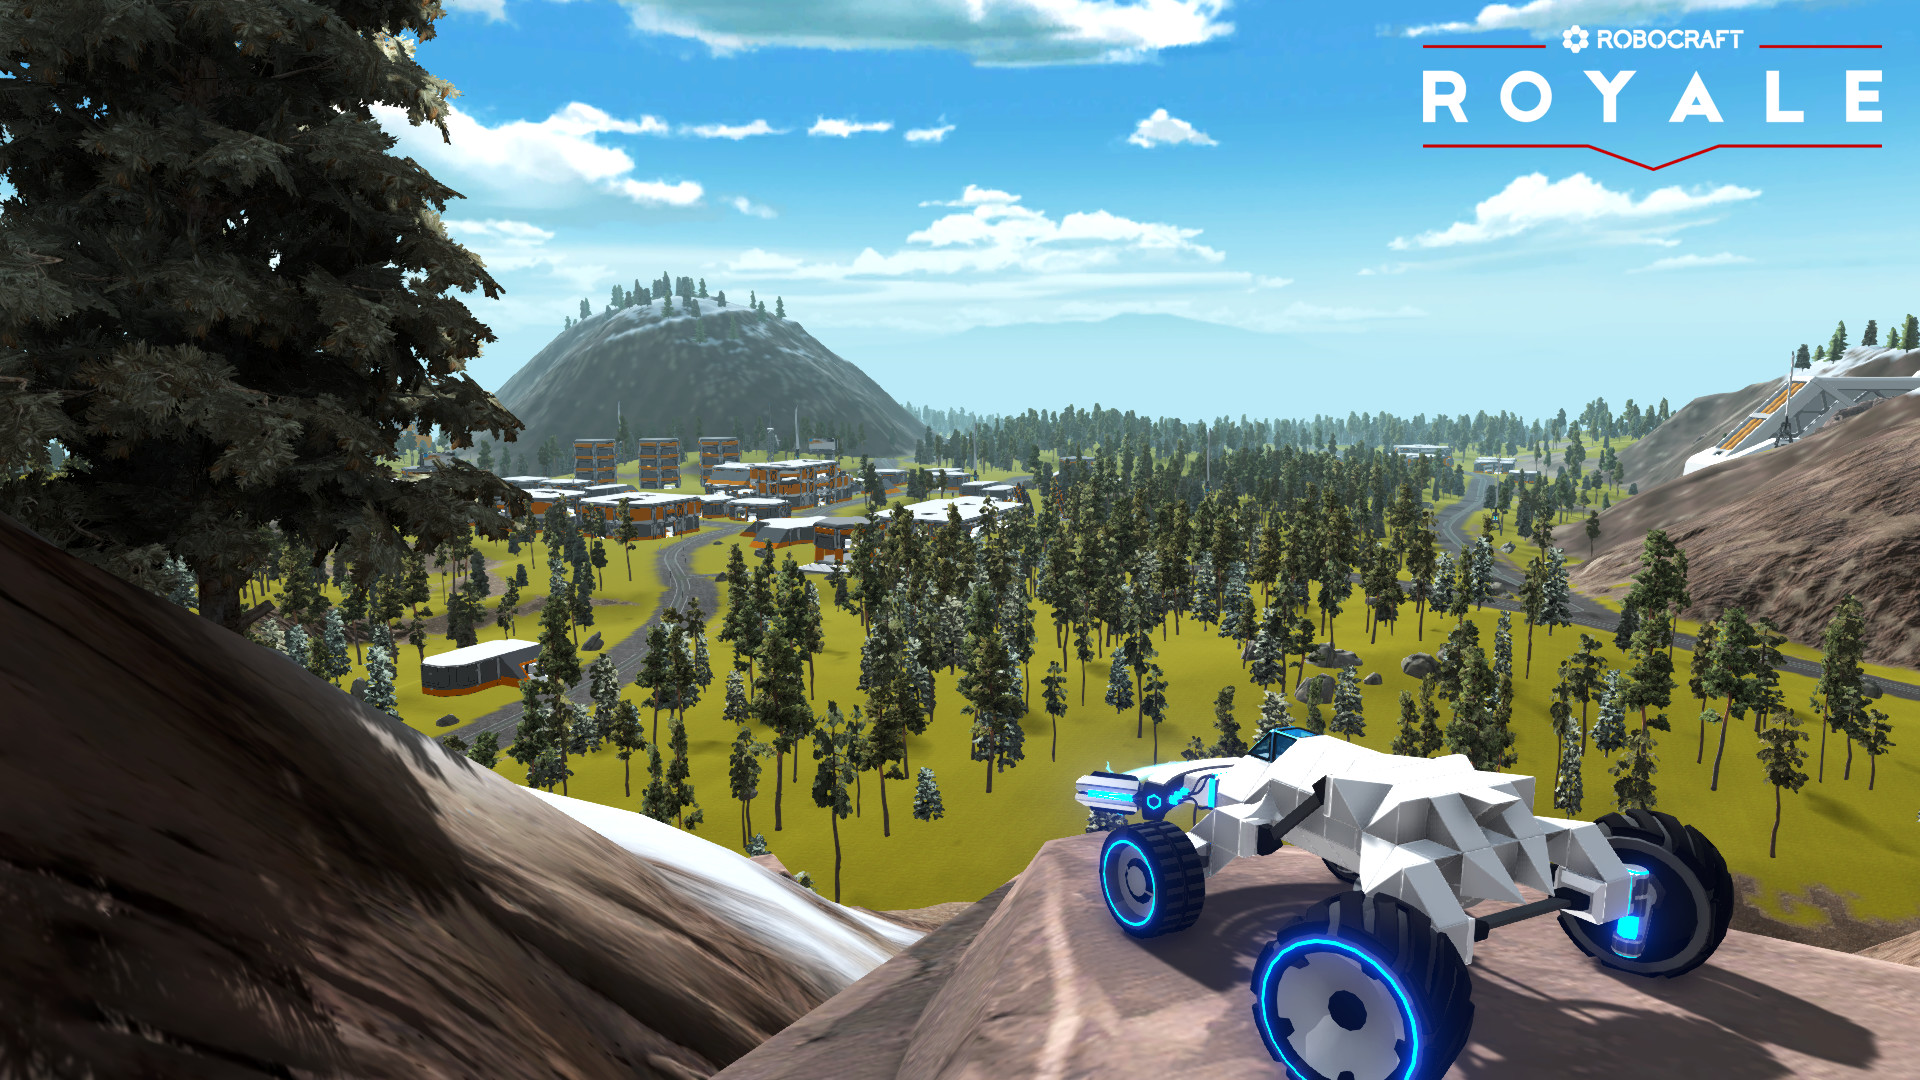 Robocraft Royale screenshot